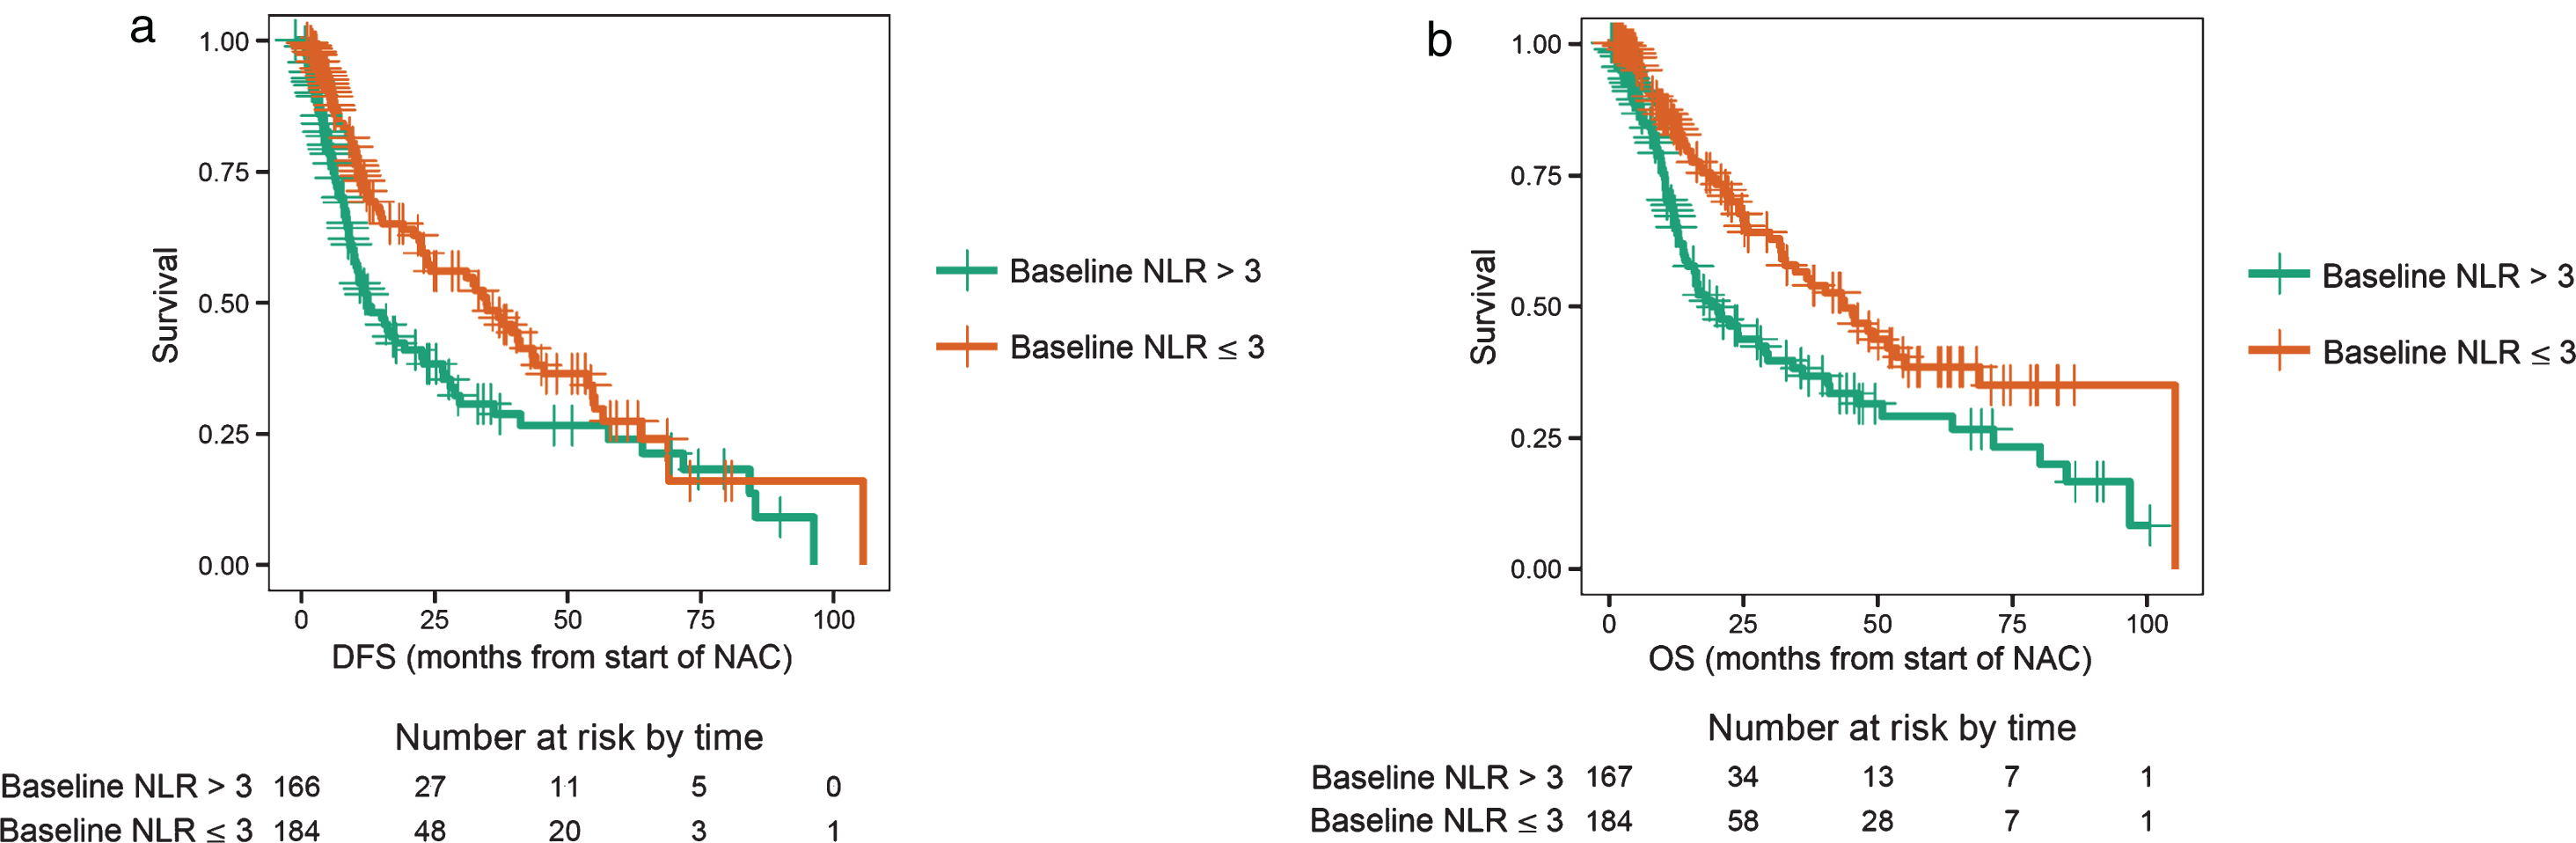 a. Disease-free survival (DFS) for a baseline neutrophil-to-lymphocyte ratio (NLR) > 3 (high) or NLR ≤ 3 (low). b. Overall survival (OS) for a baseline neutrophil-to-lymphocyte ratio (NLR) > 3 (high) or NLR ≤ 3 (low).